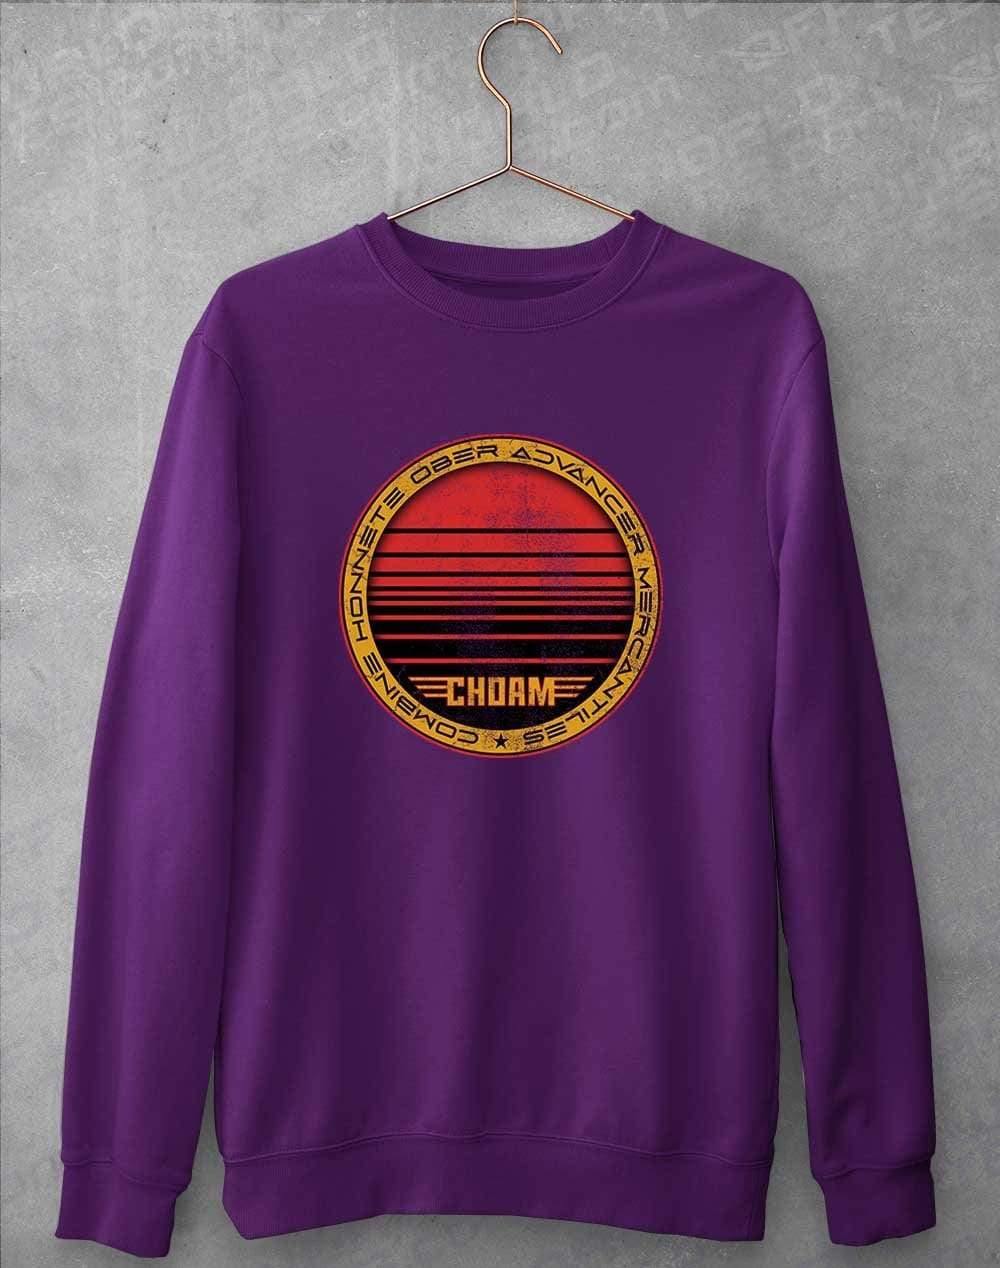 CHOAM Sweatshirt S / Purple  - Off World Tees